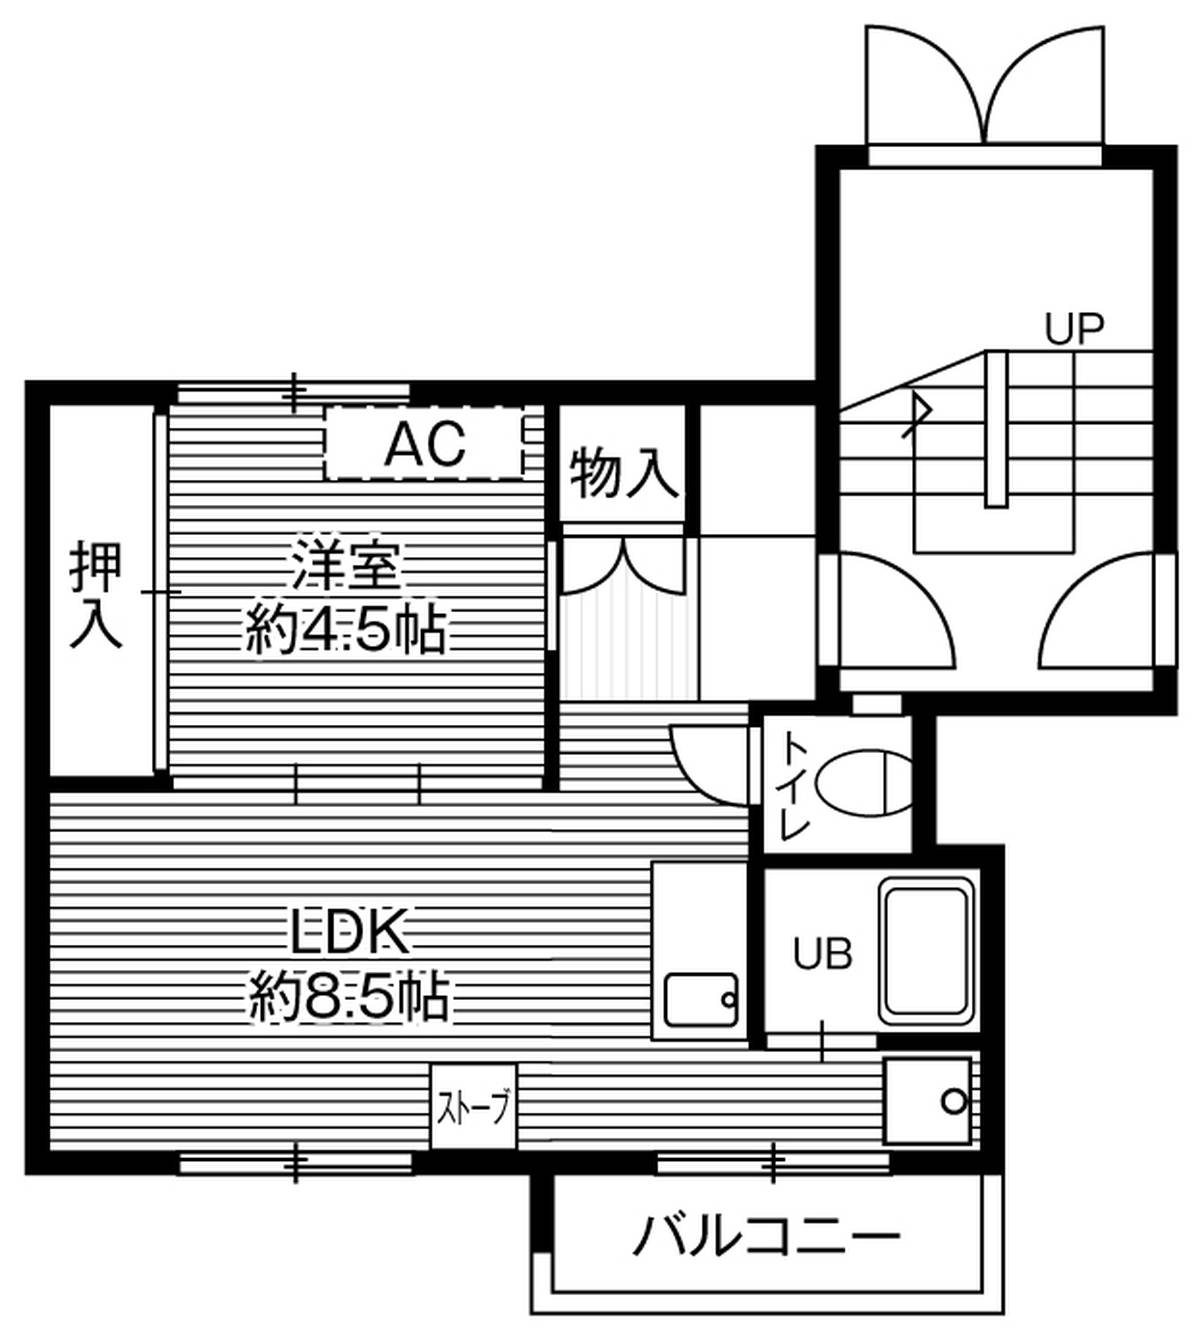 1LDK floorplan of Village House Obihiro in Obihiro-shi